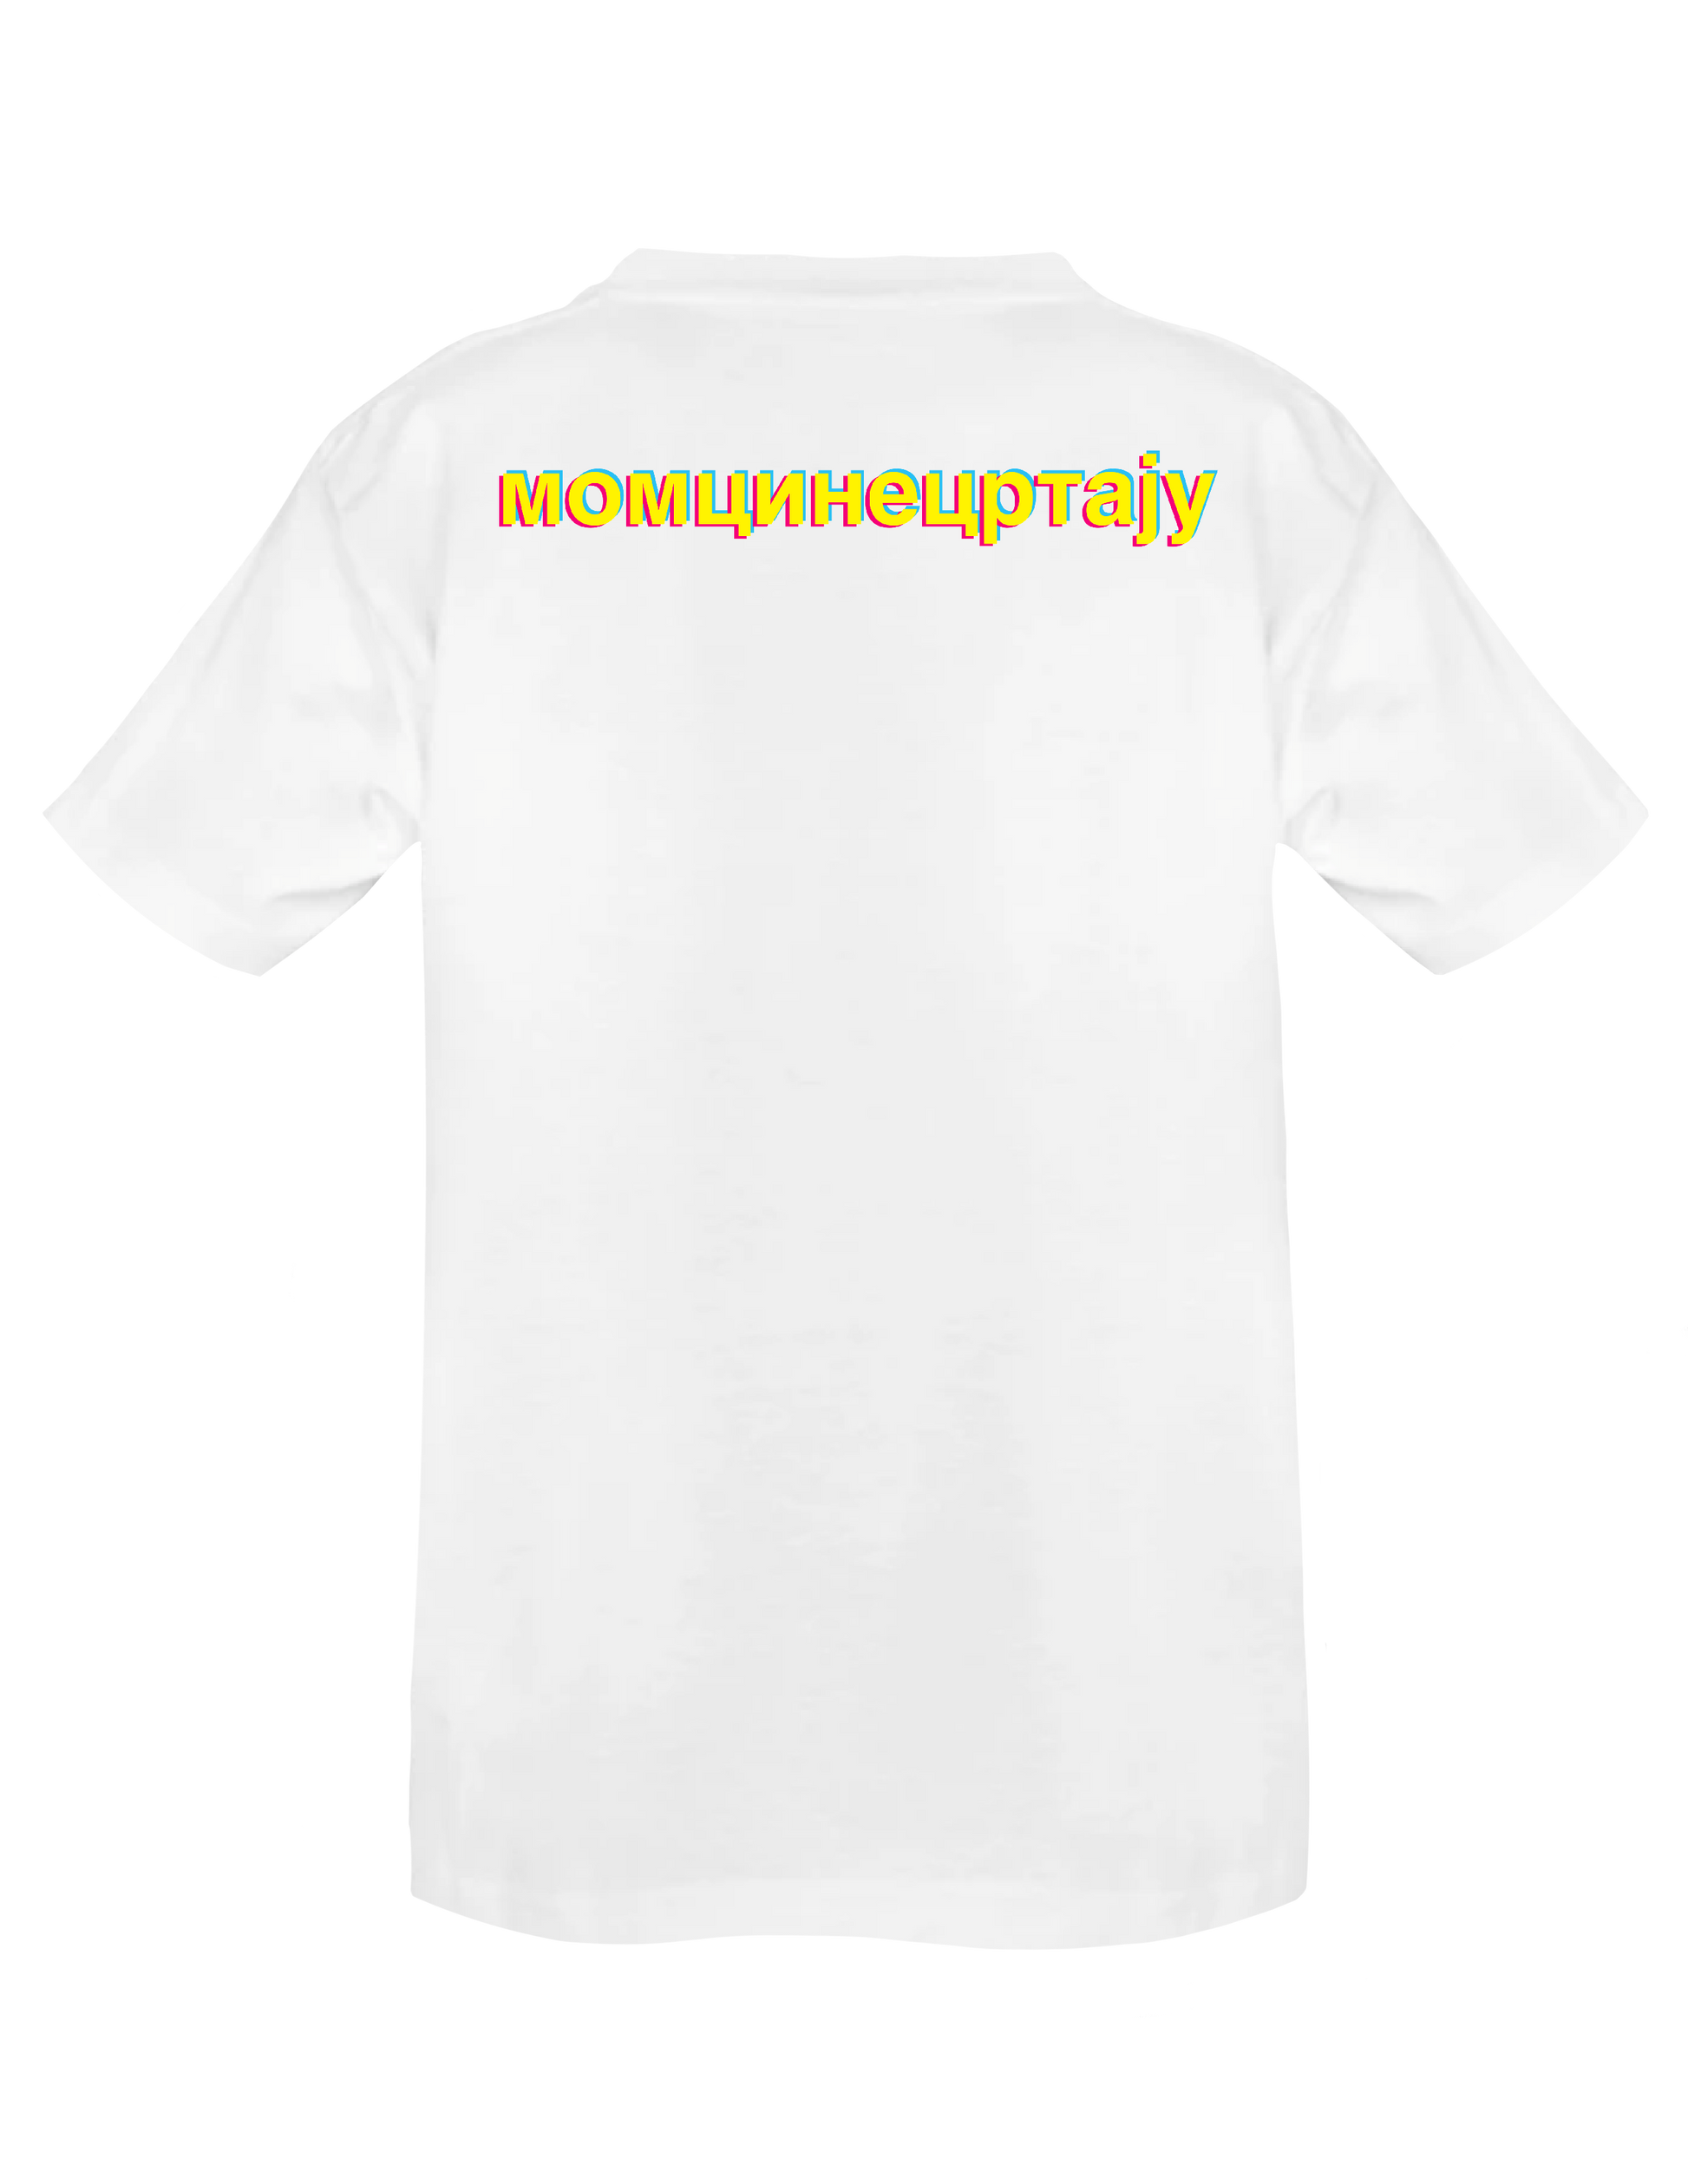 ATOMIC DYSTOPIA - ROBO FACE (White) - T-Shirt by BOYSDONTDRAW